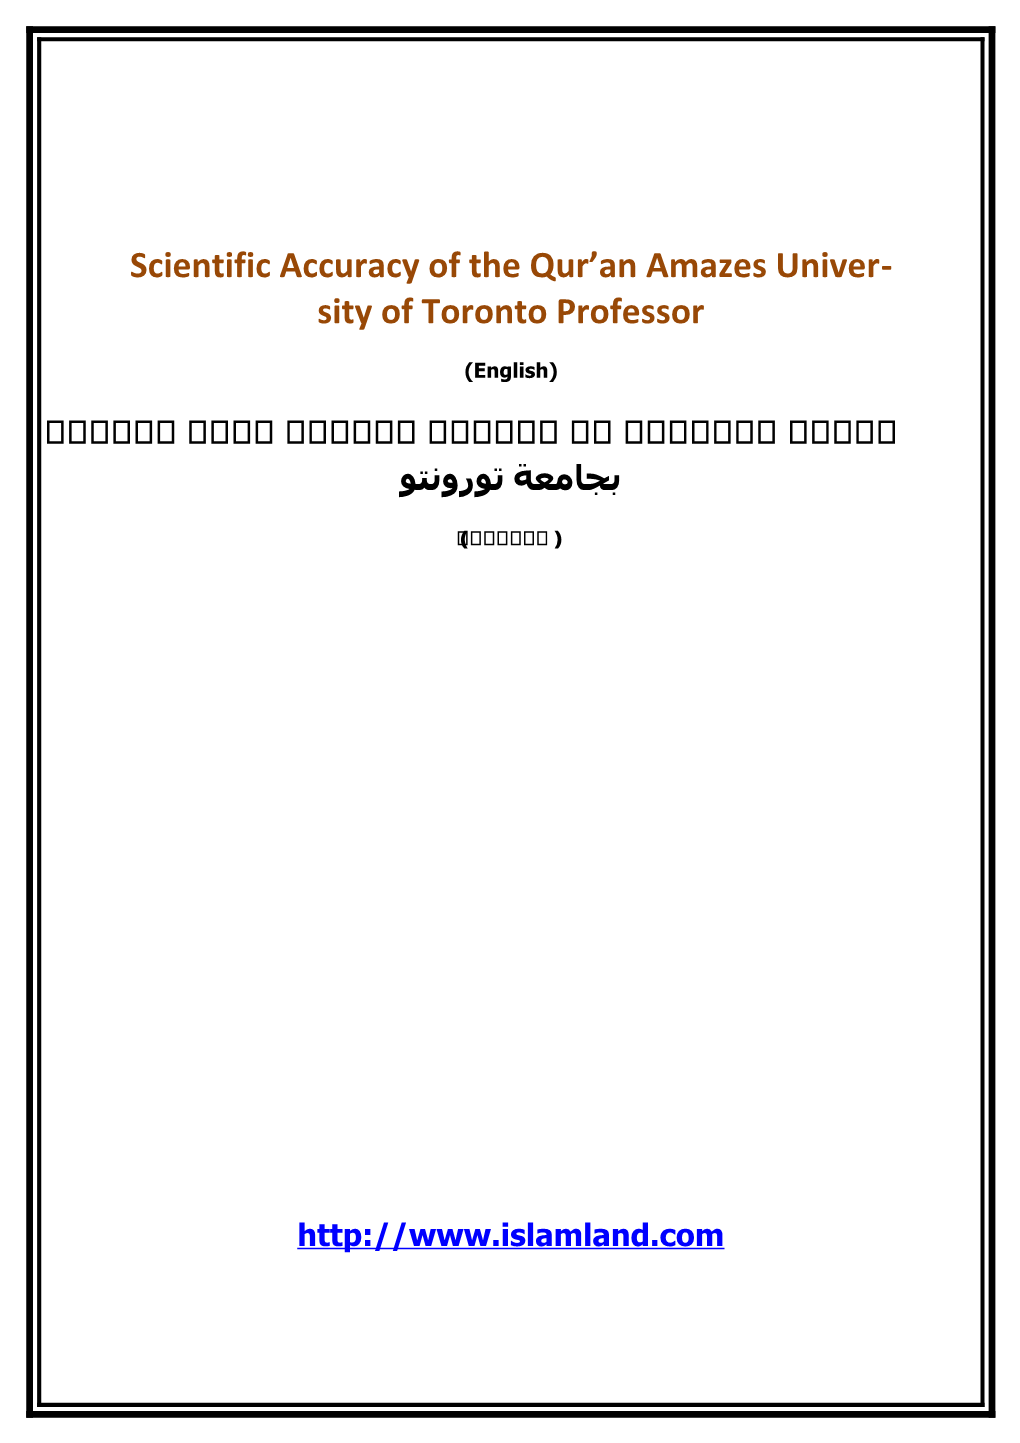 Scientific Accuracy of the Qur an Amazes University of Toronto Professor